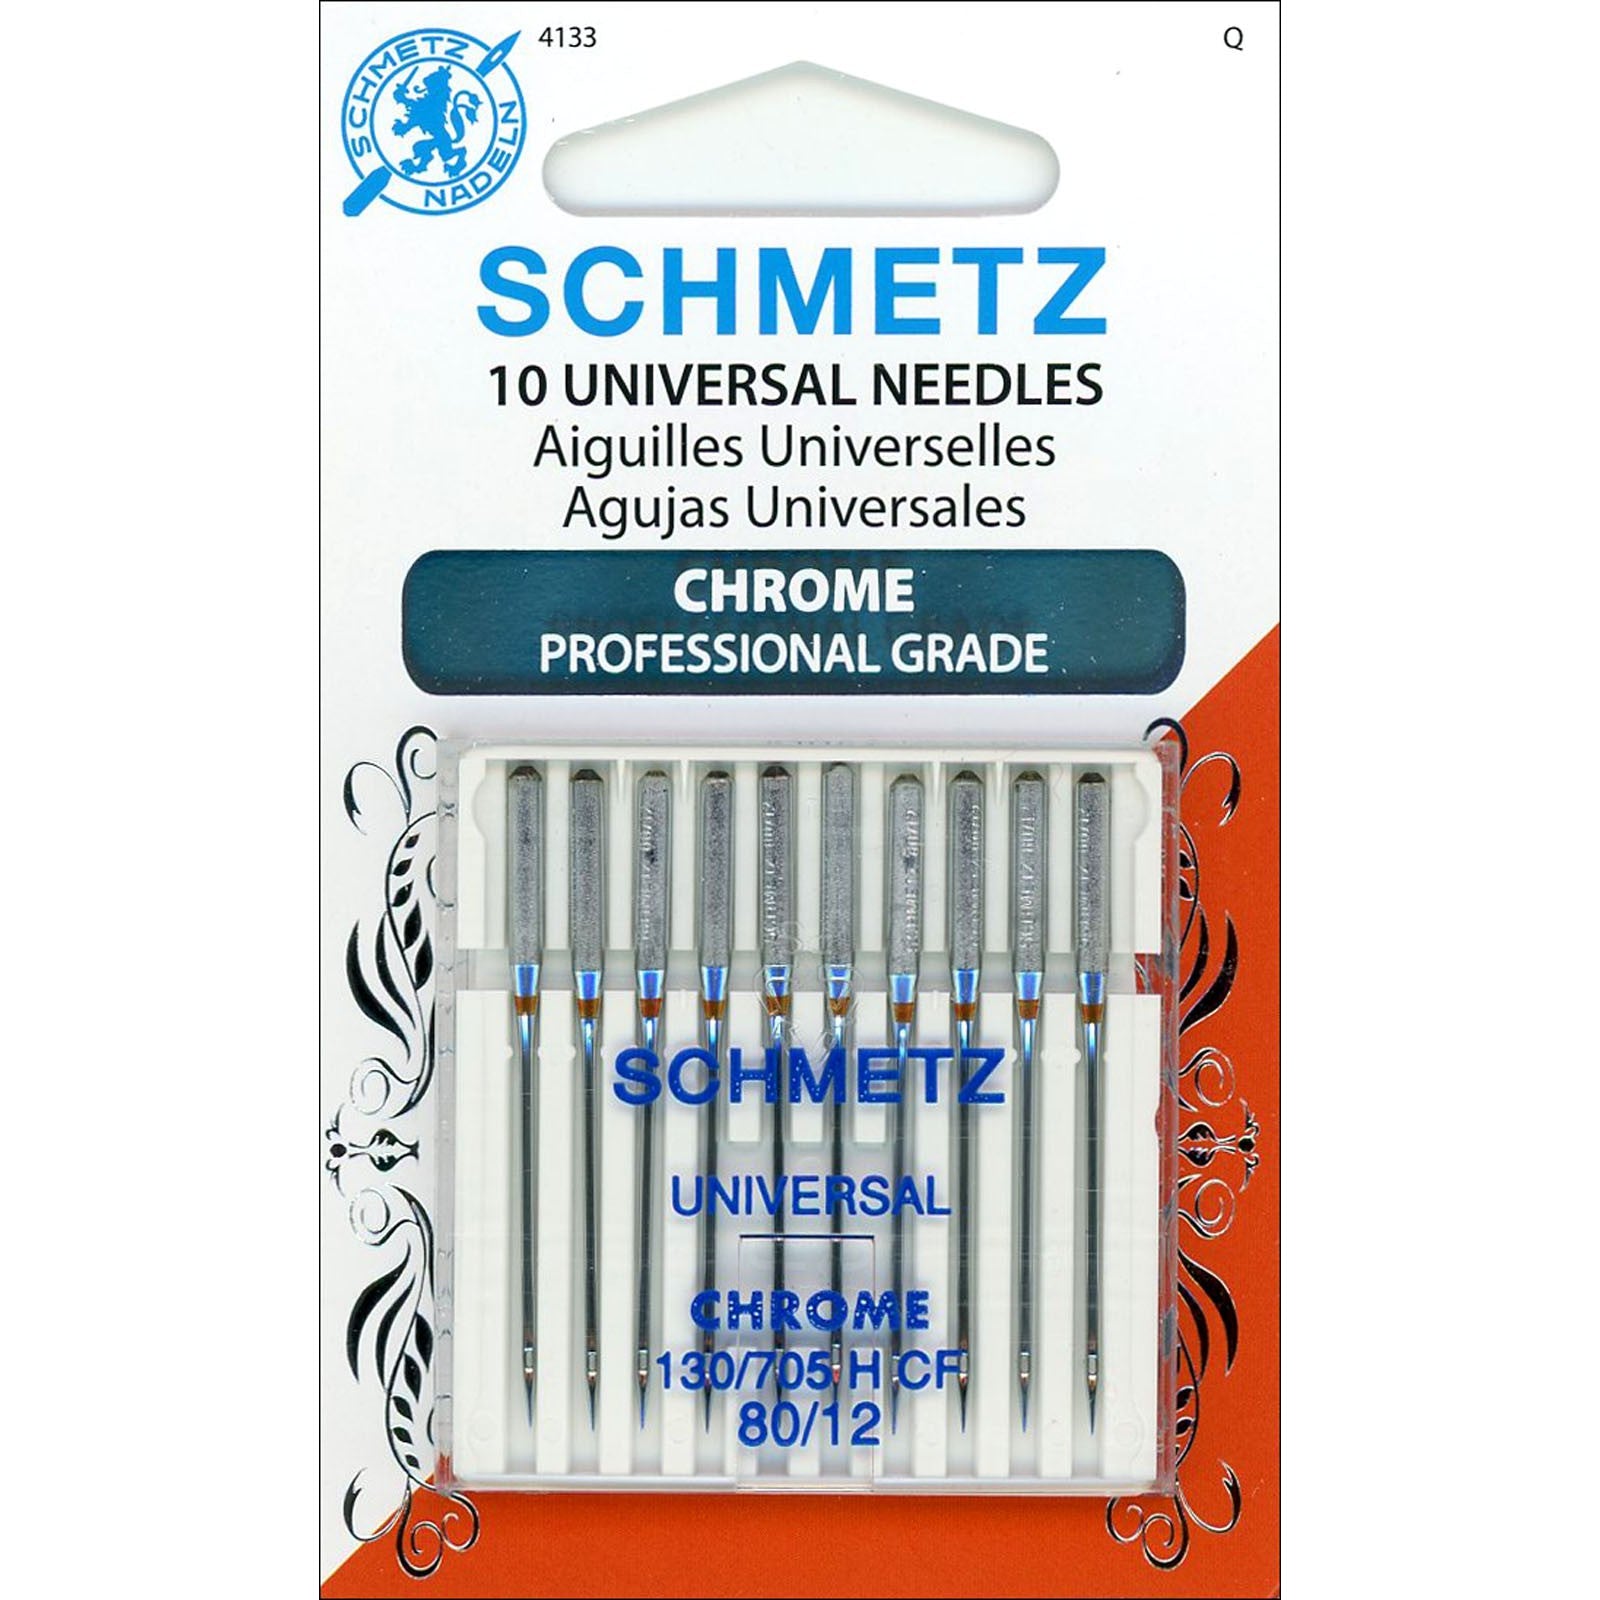 Schmetz Universal Chrome Needle Professional Grade 80/12